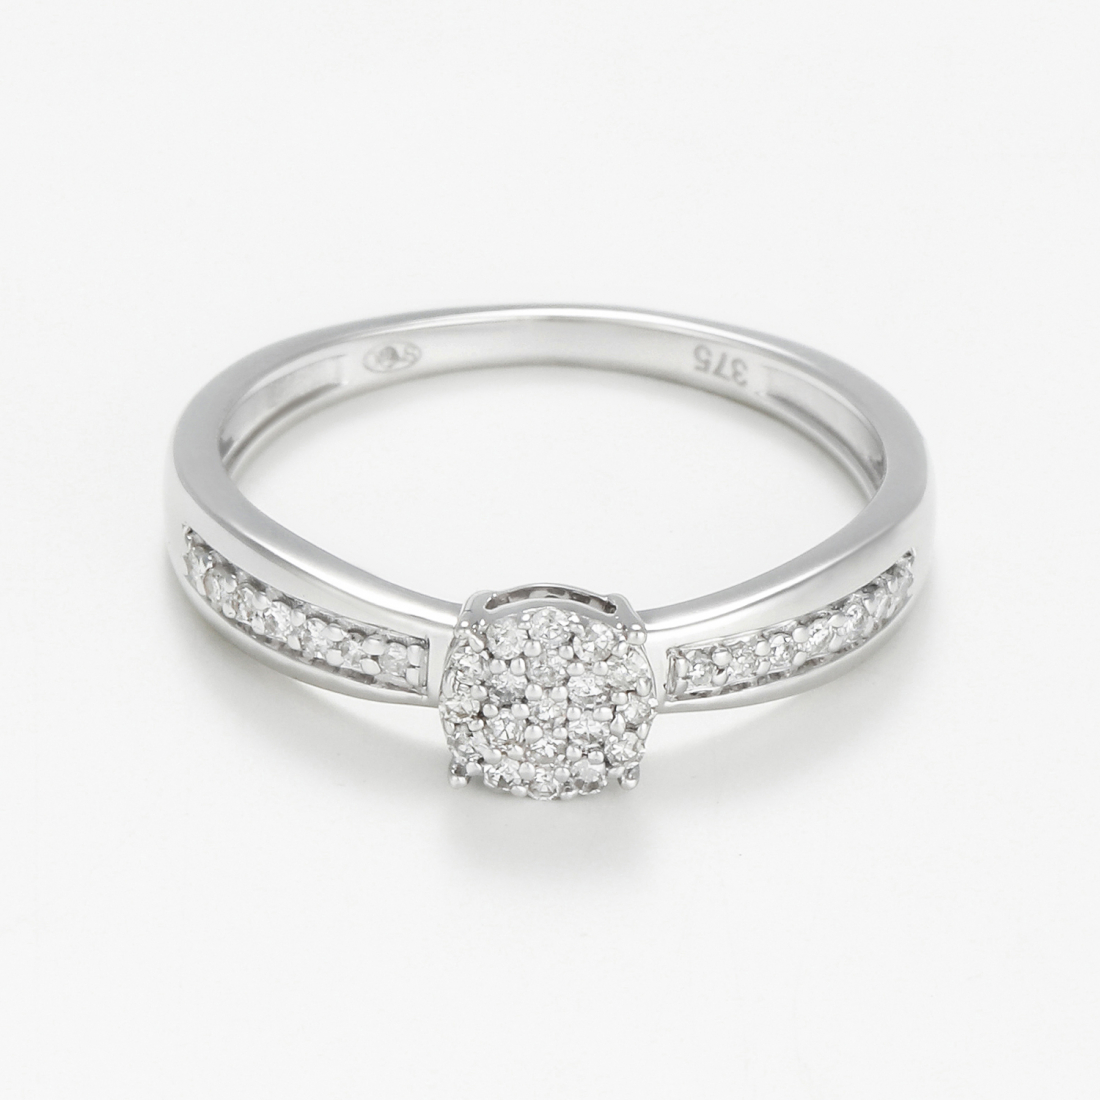 Women's 'Romantic' Ring